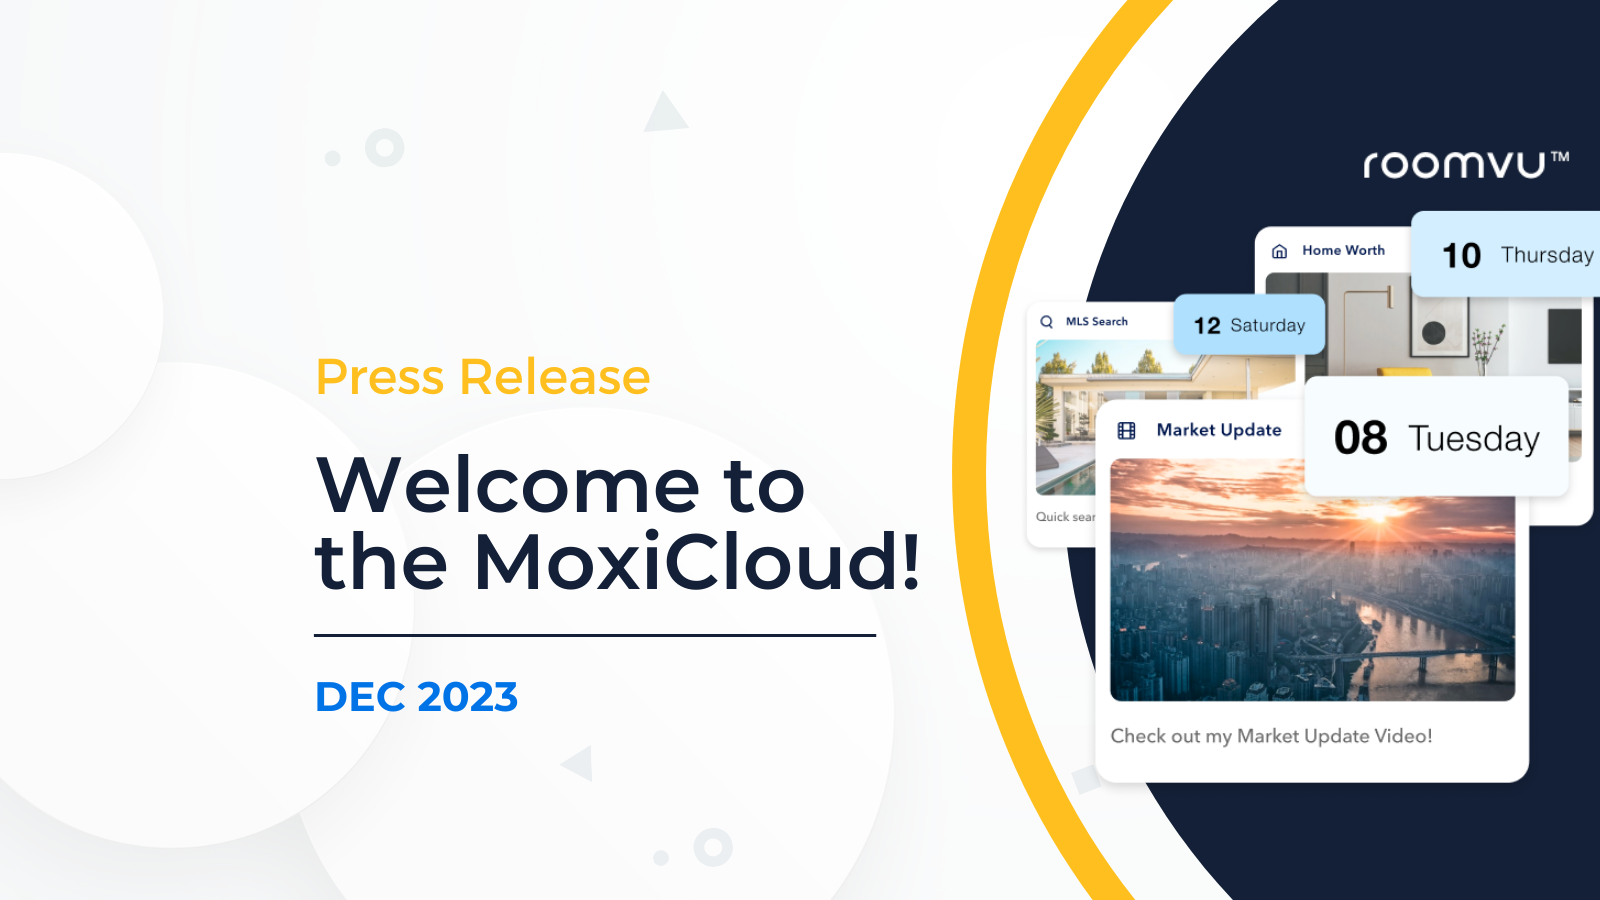 Image. Welcome to the MoxiCloud! Roomvu joins the MoxiCloud Partner Program